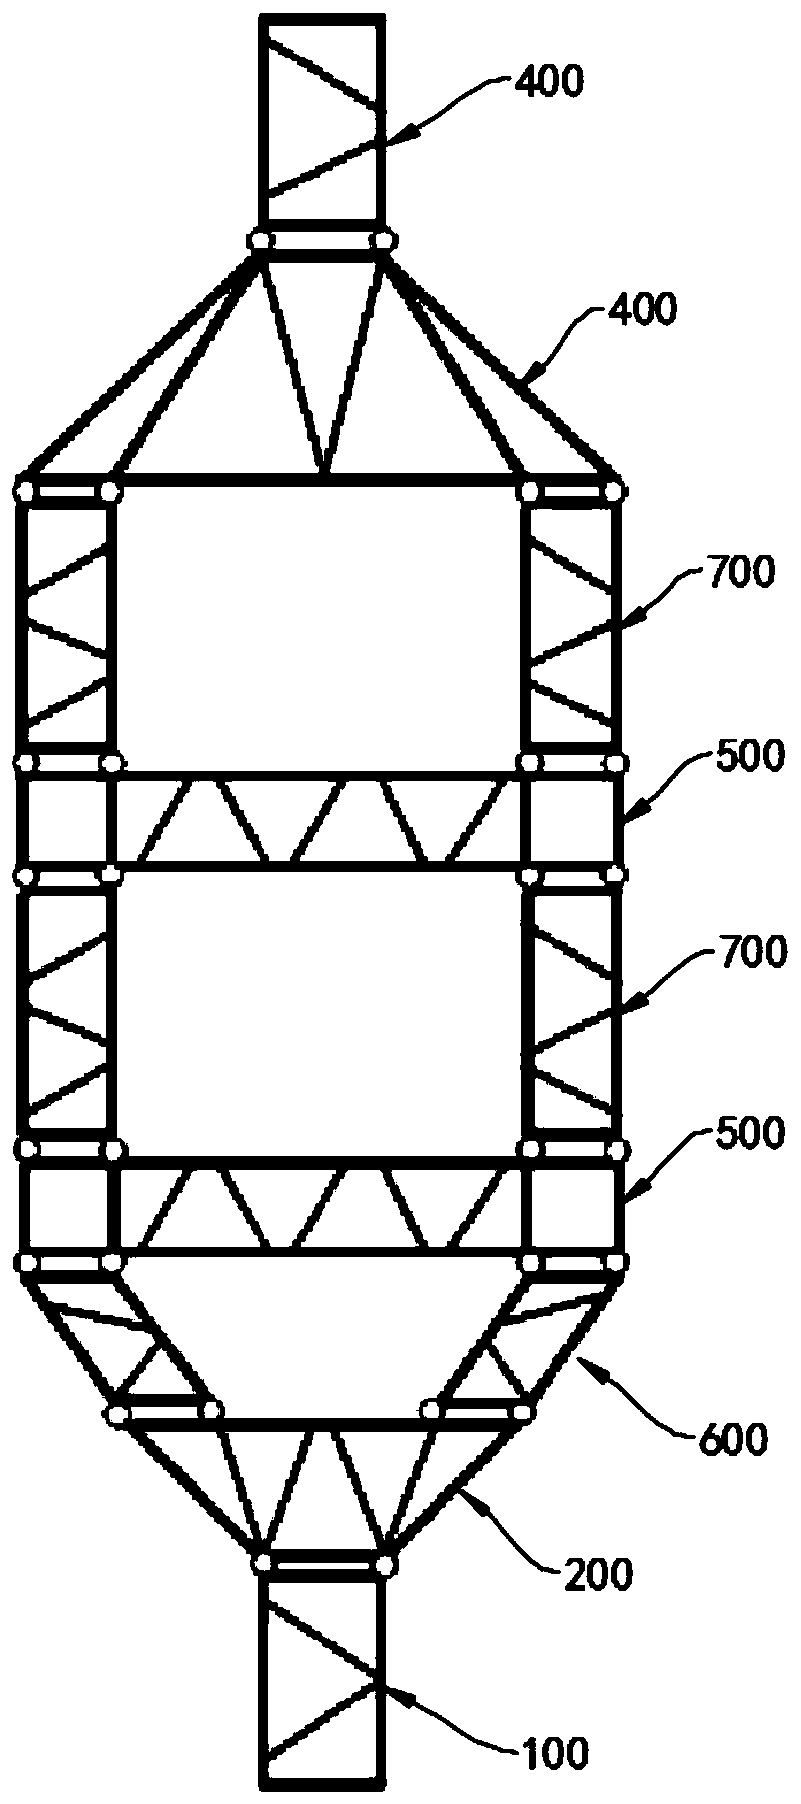 Lattice type variable diameter component boom and crane